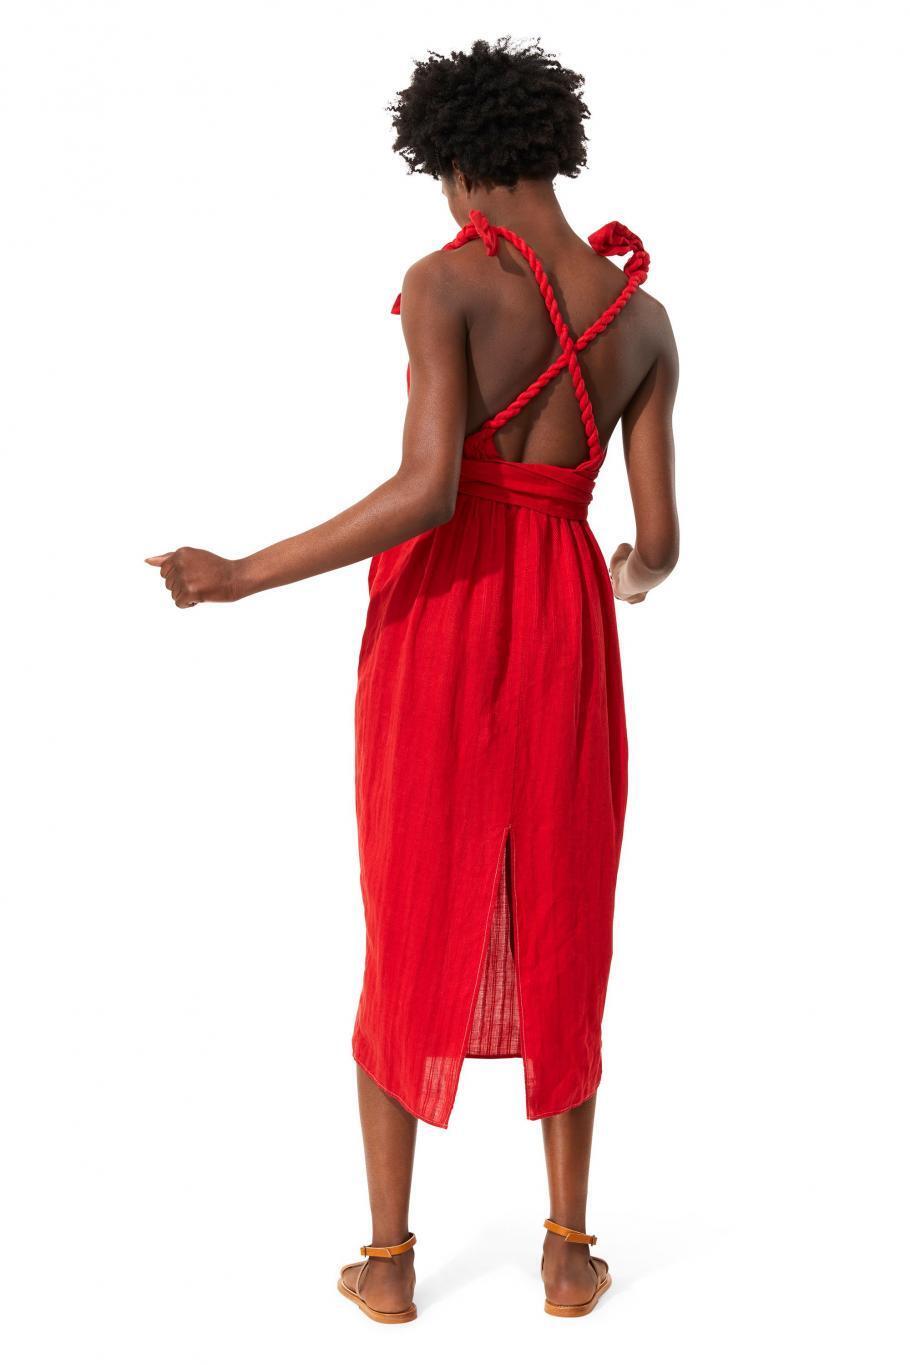 XL - Mara Hoffman Calypso Red NEW Braided Strap Plunge Neck Maxi Dress 1118SM